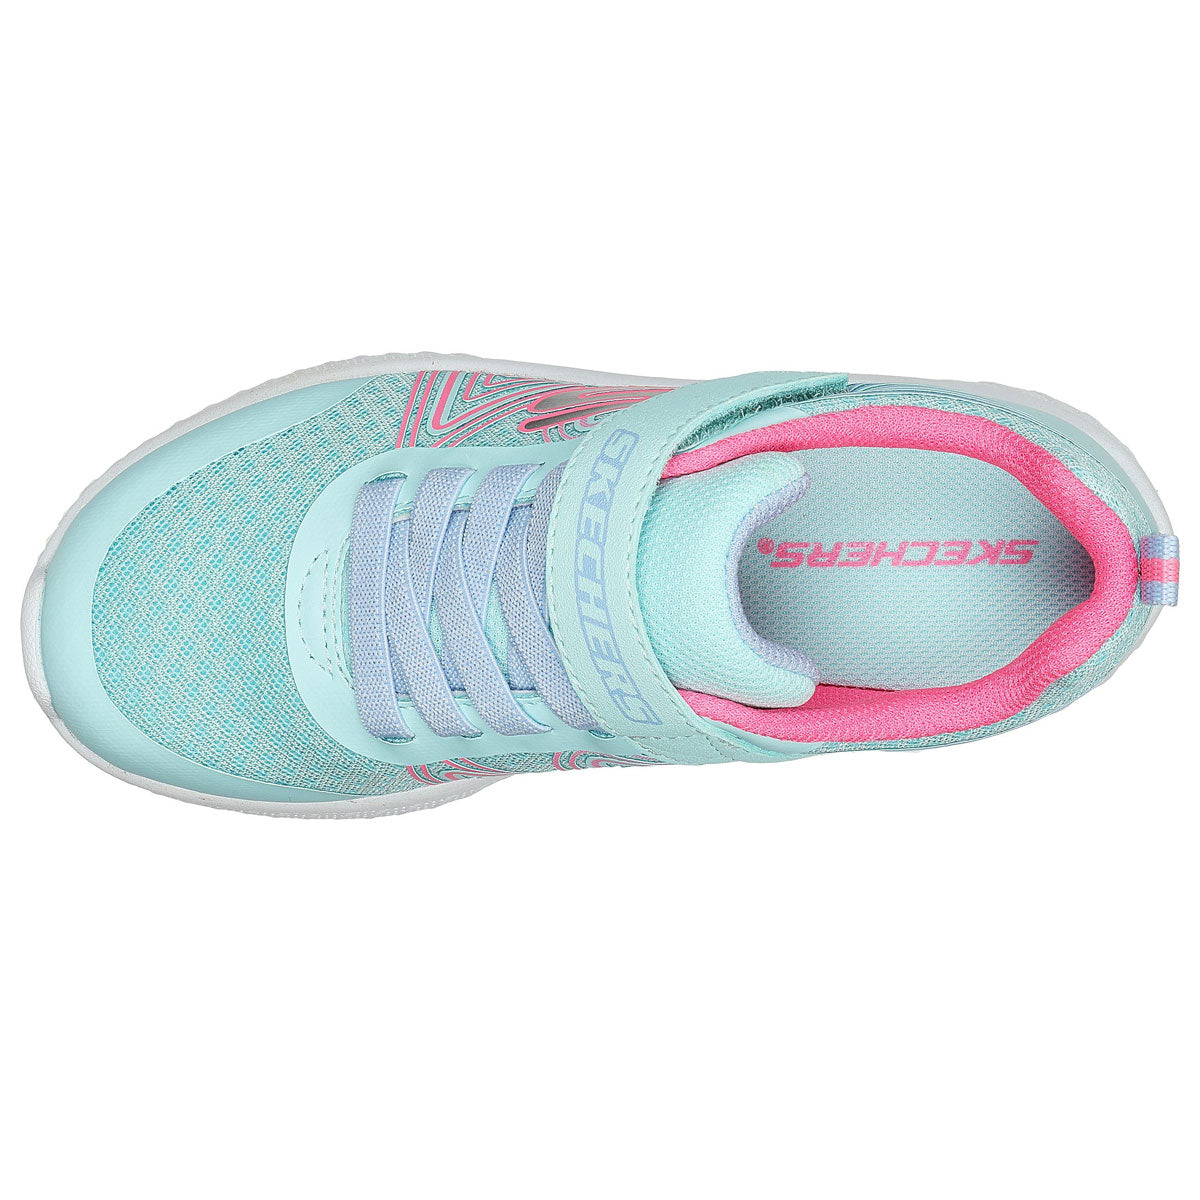 Skechers Microspec Plus Trainers - Girls - Aqua/Pink